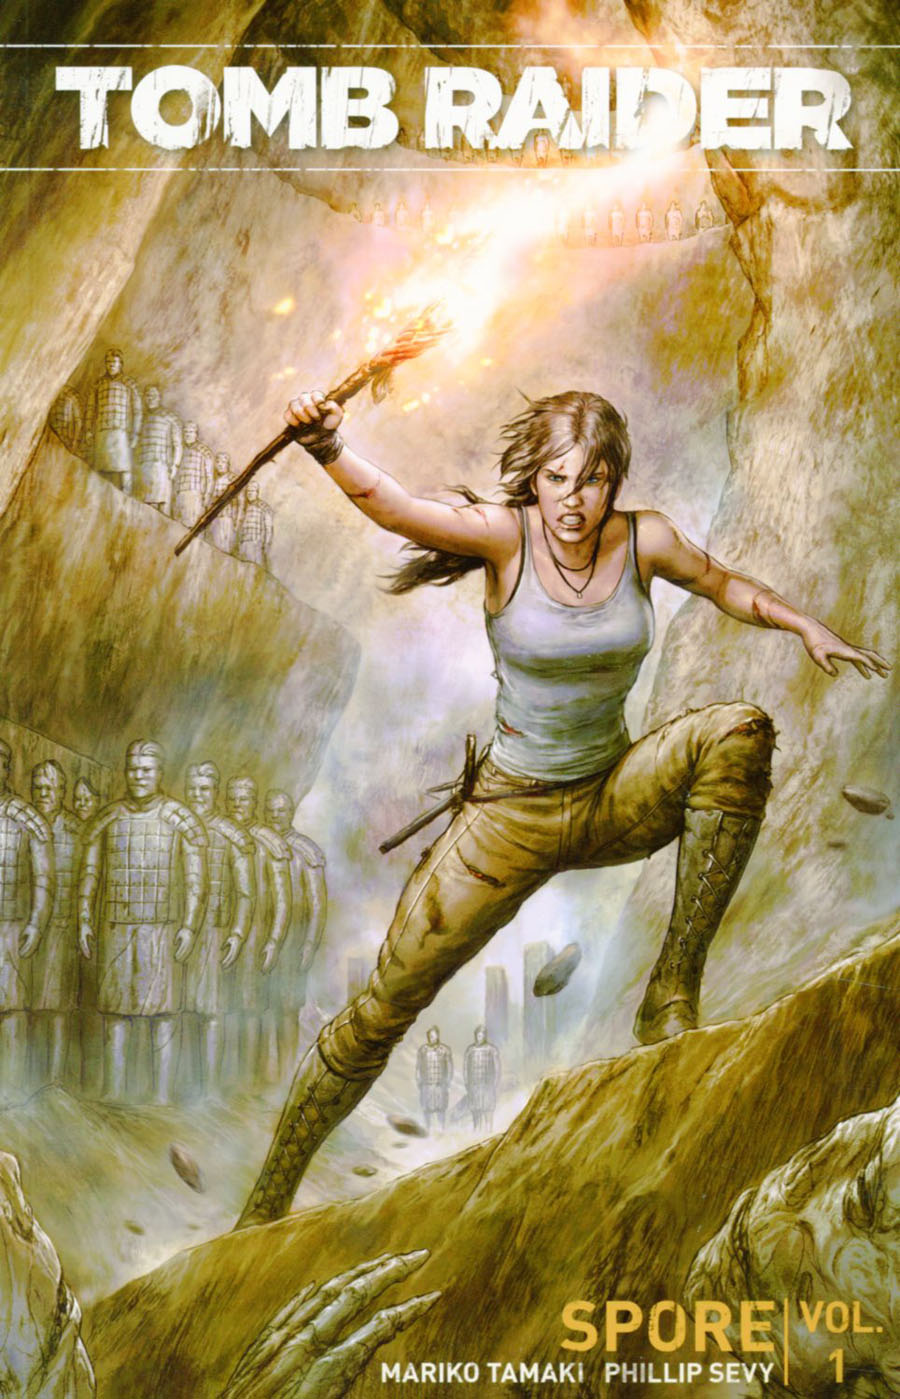 Tomb Raider 2016 Vol 1 Spore TP